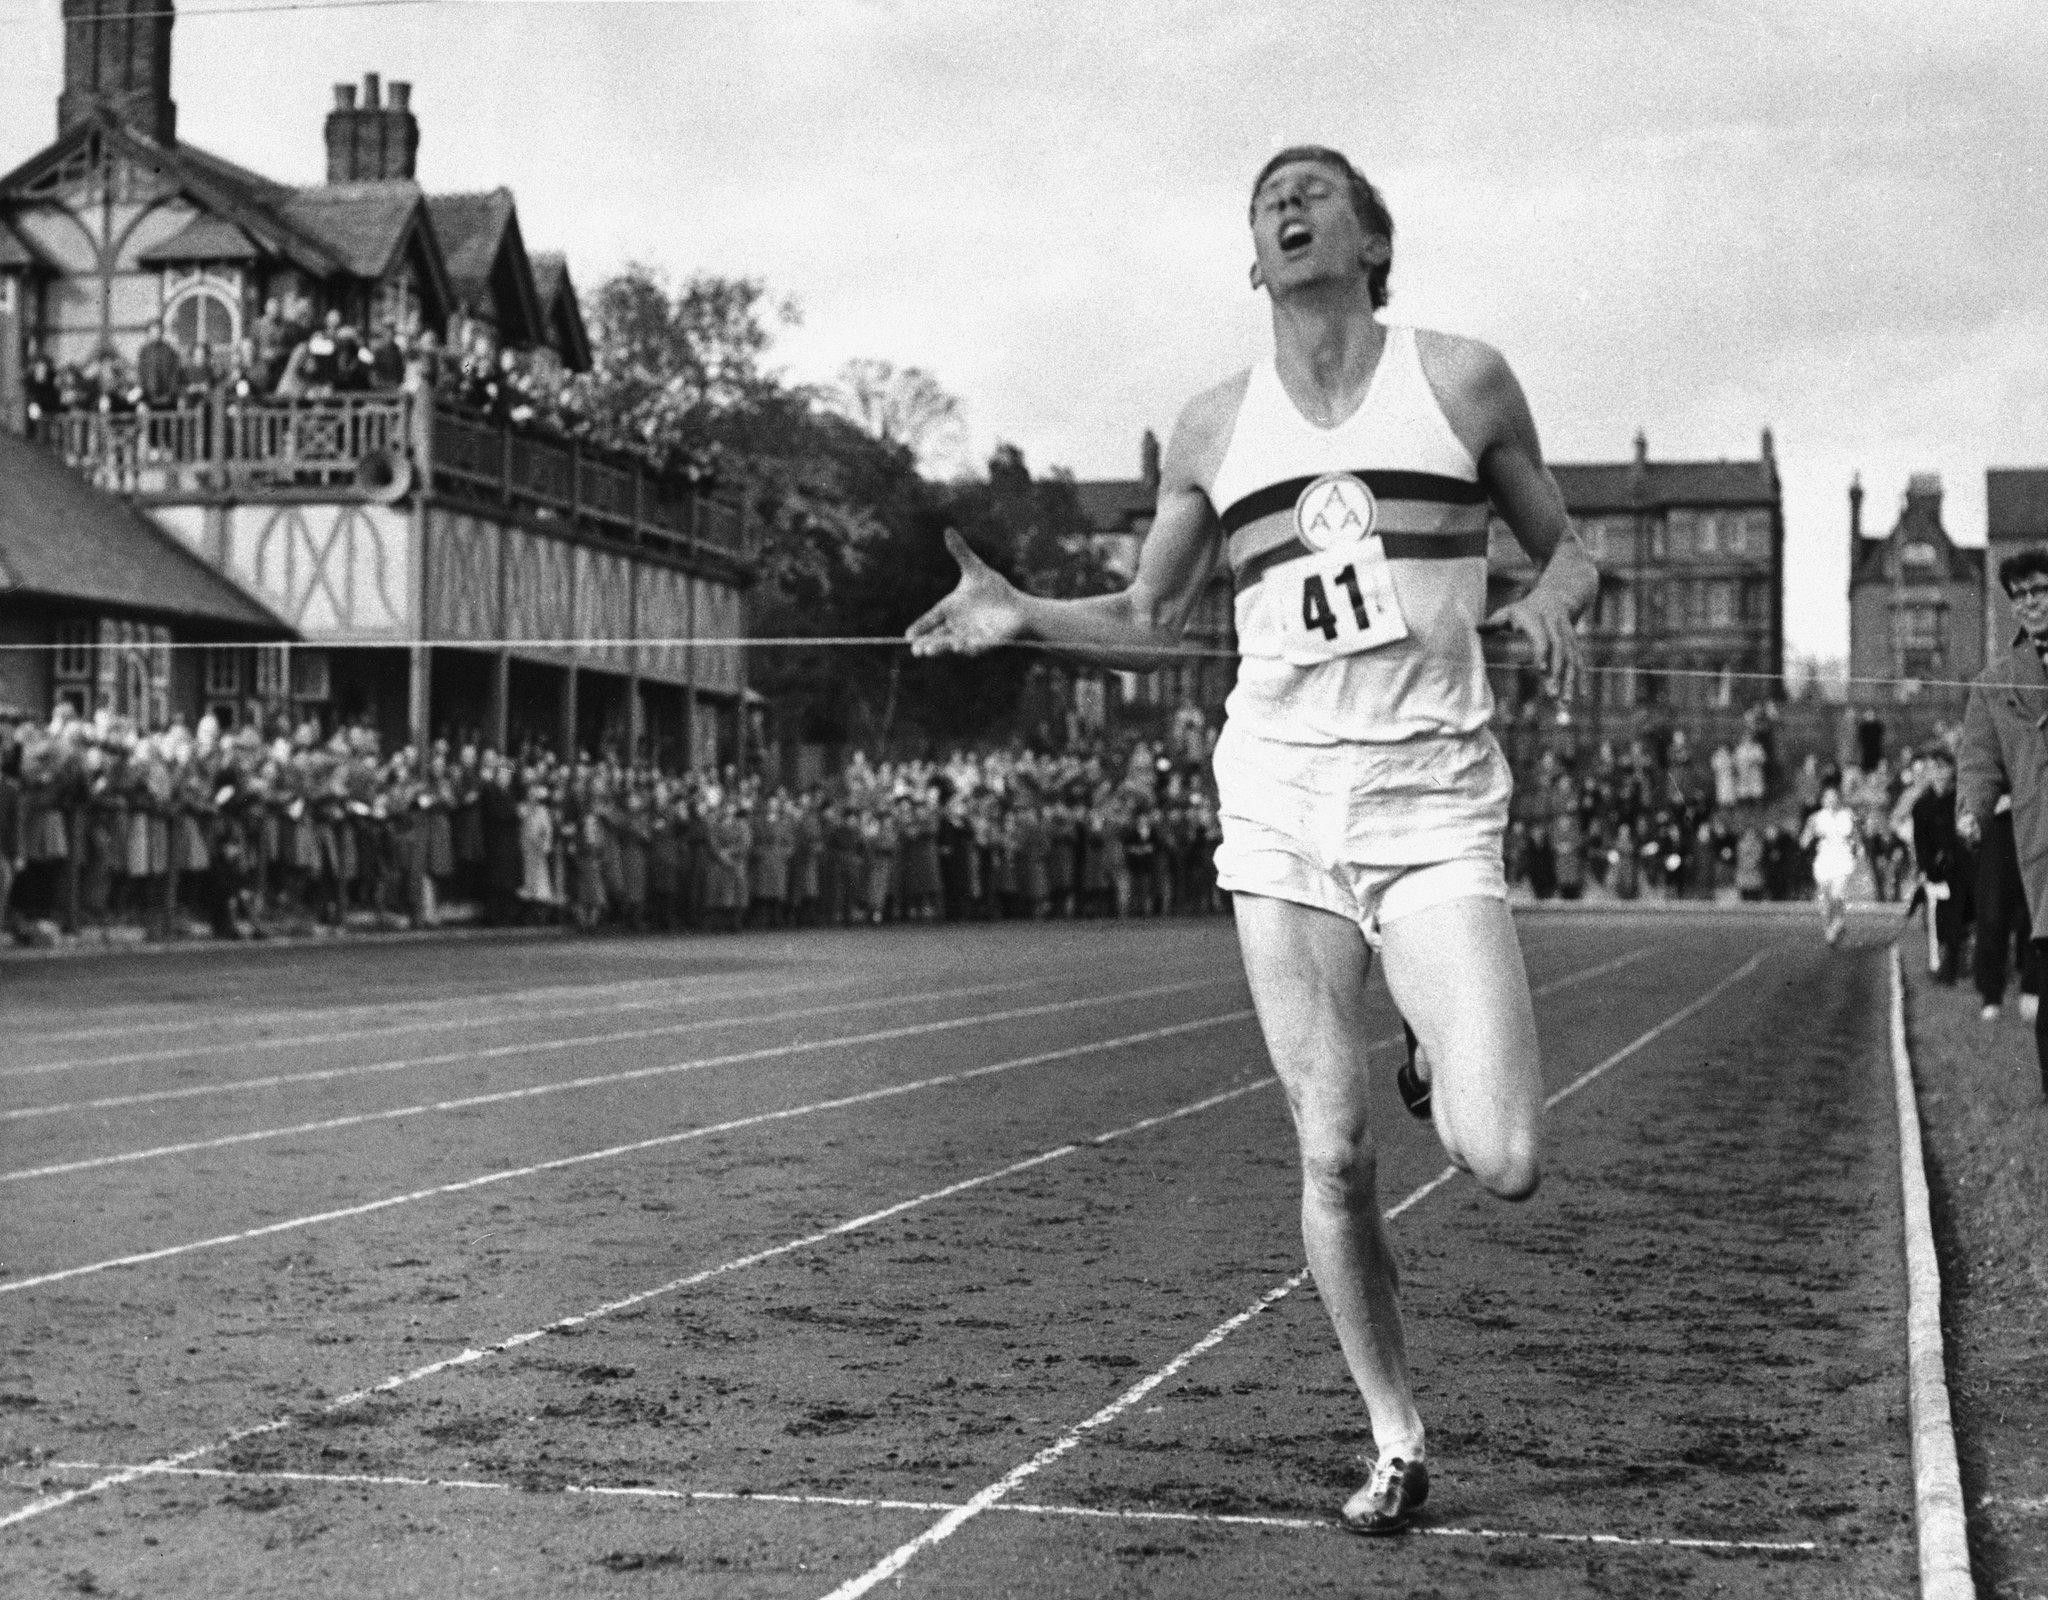 Roger Bannisterâ€™s achievement transcended sport, let alone athletics says Seb Coe 